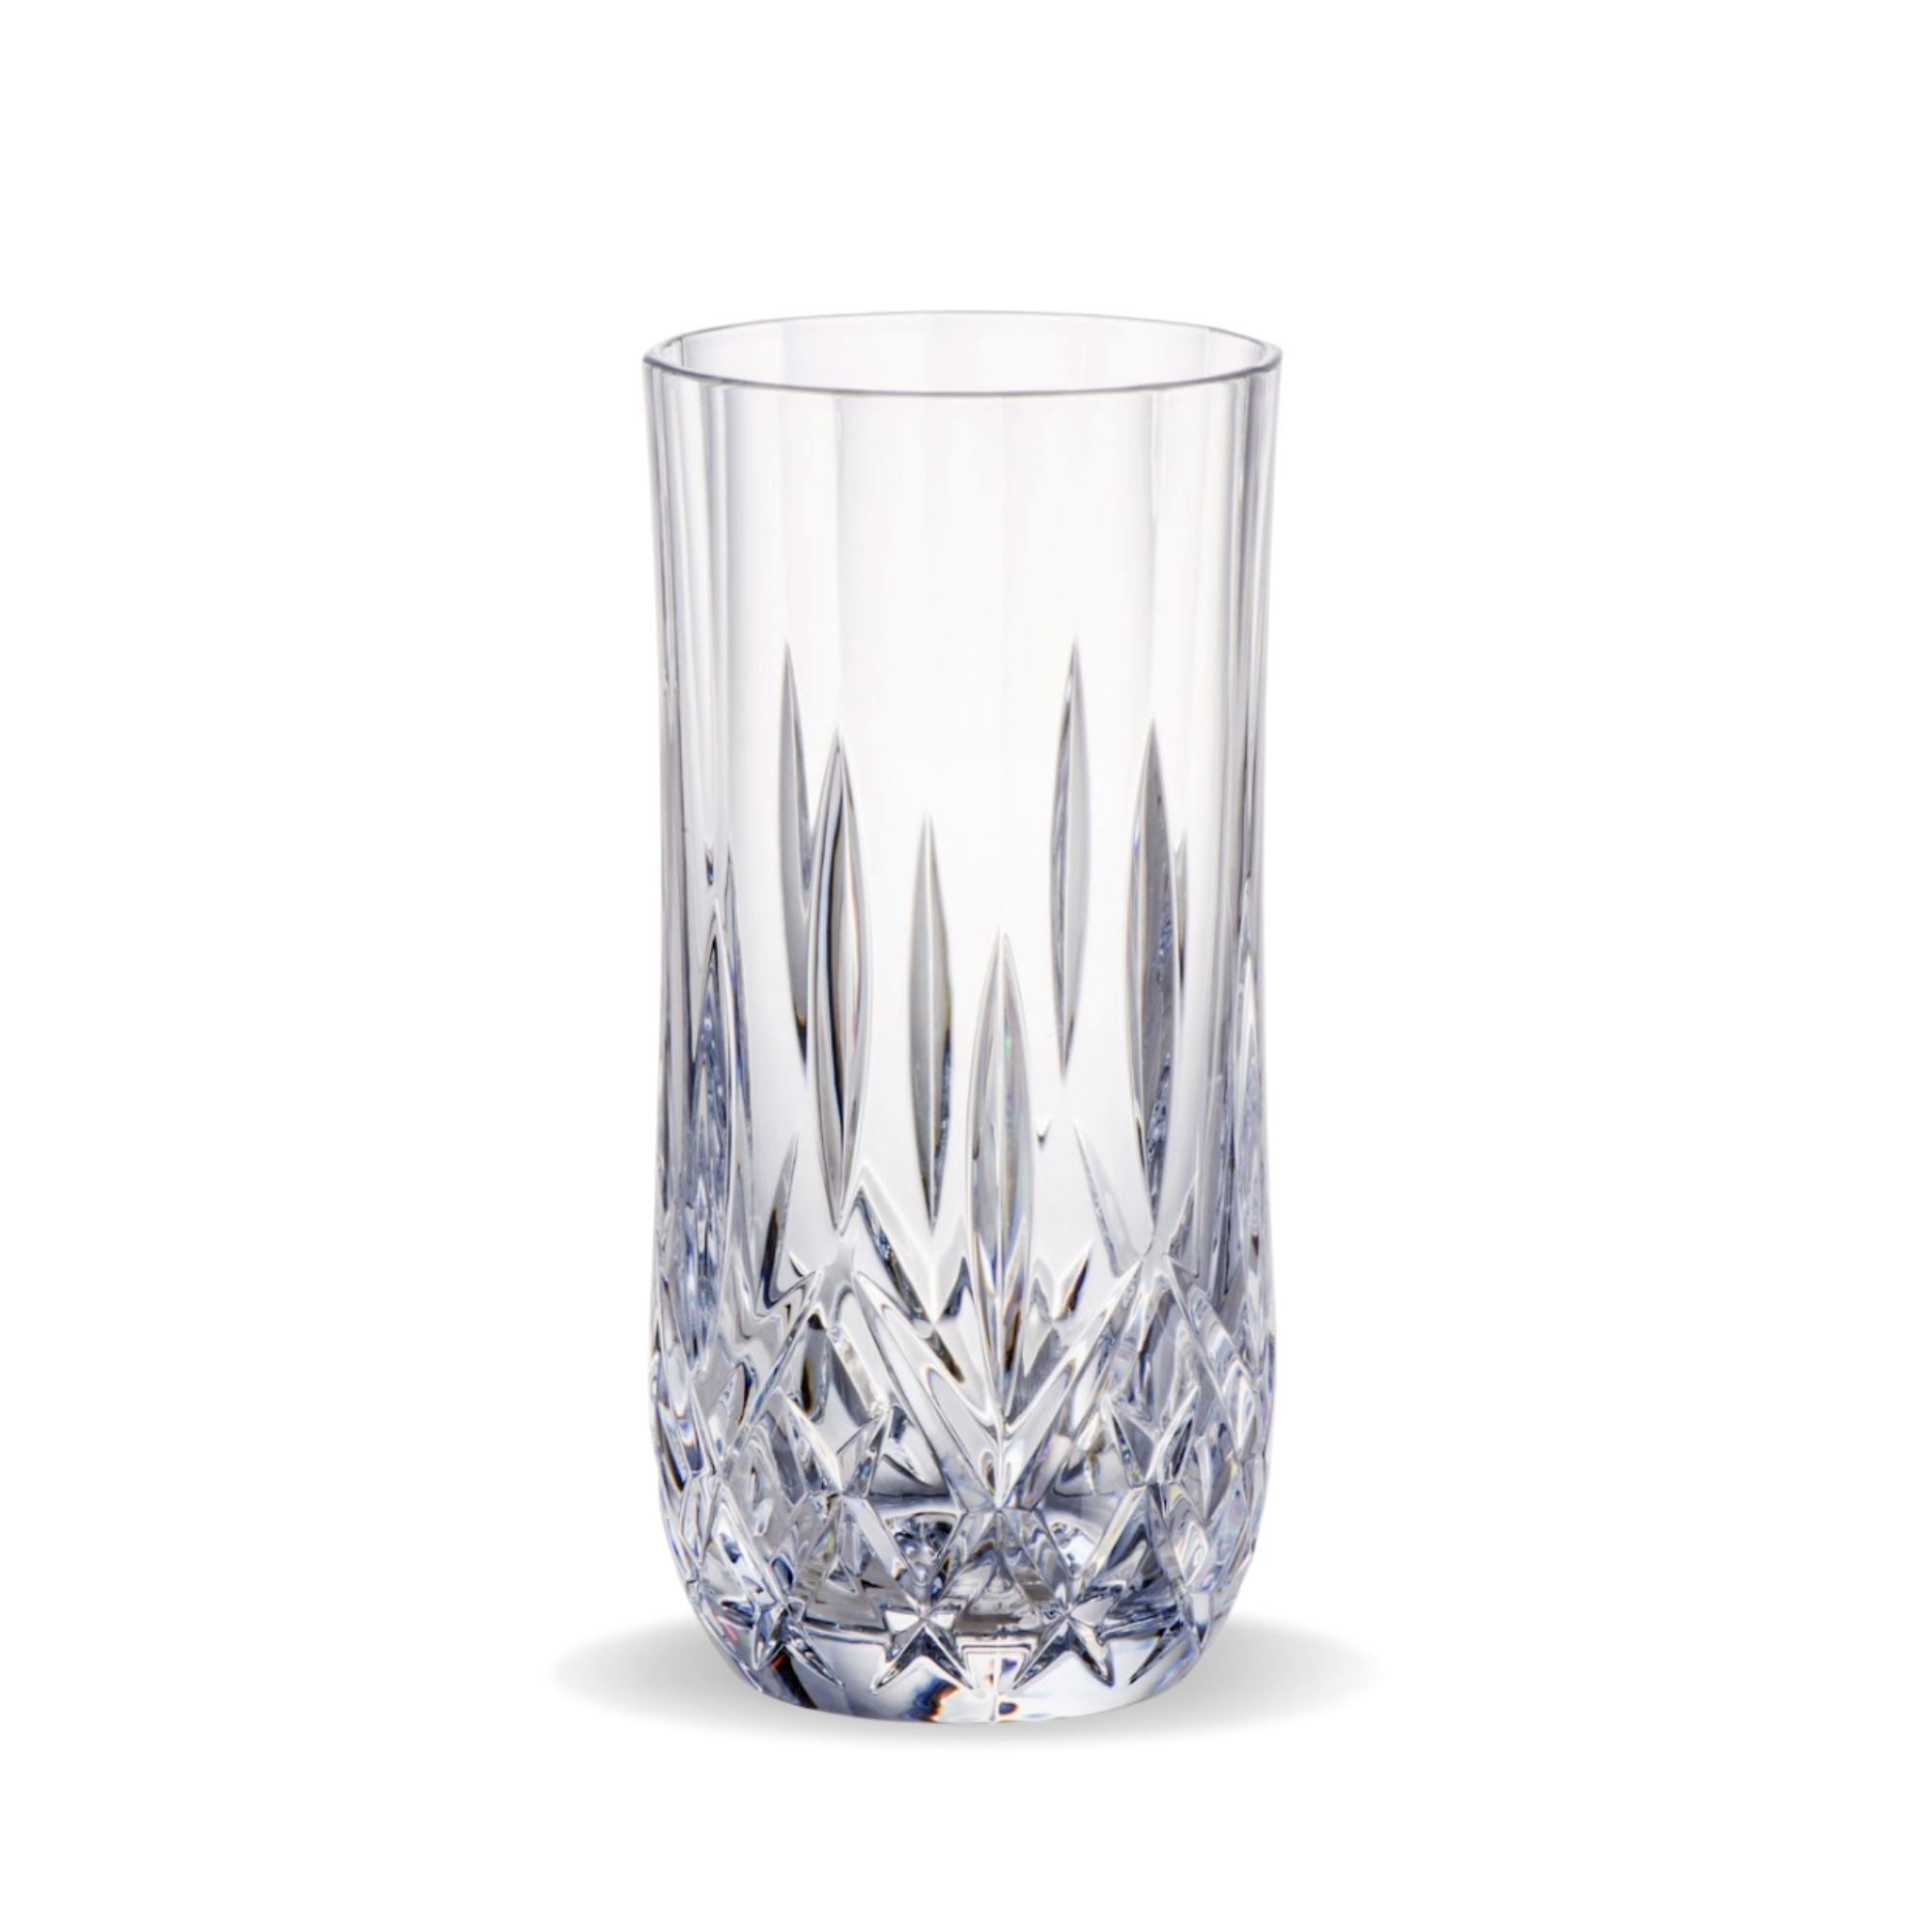 Unbreakable Cut Crystal Highball Glasses 380ml - Set of 4 Highball Glass D-STILL Drinkware 